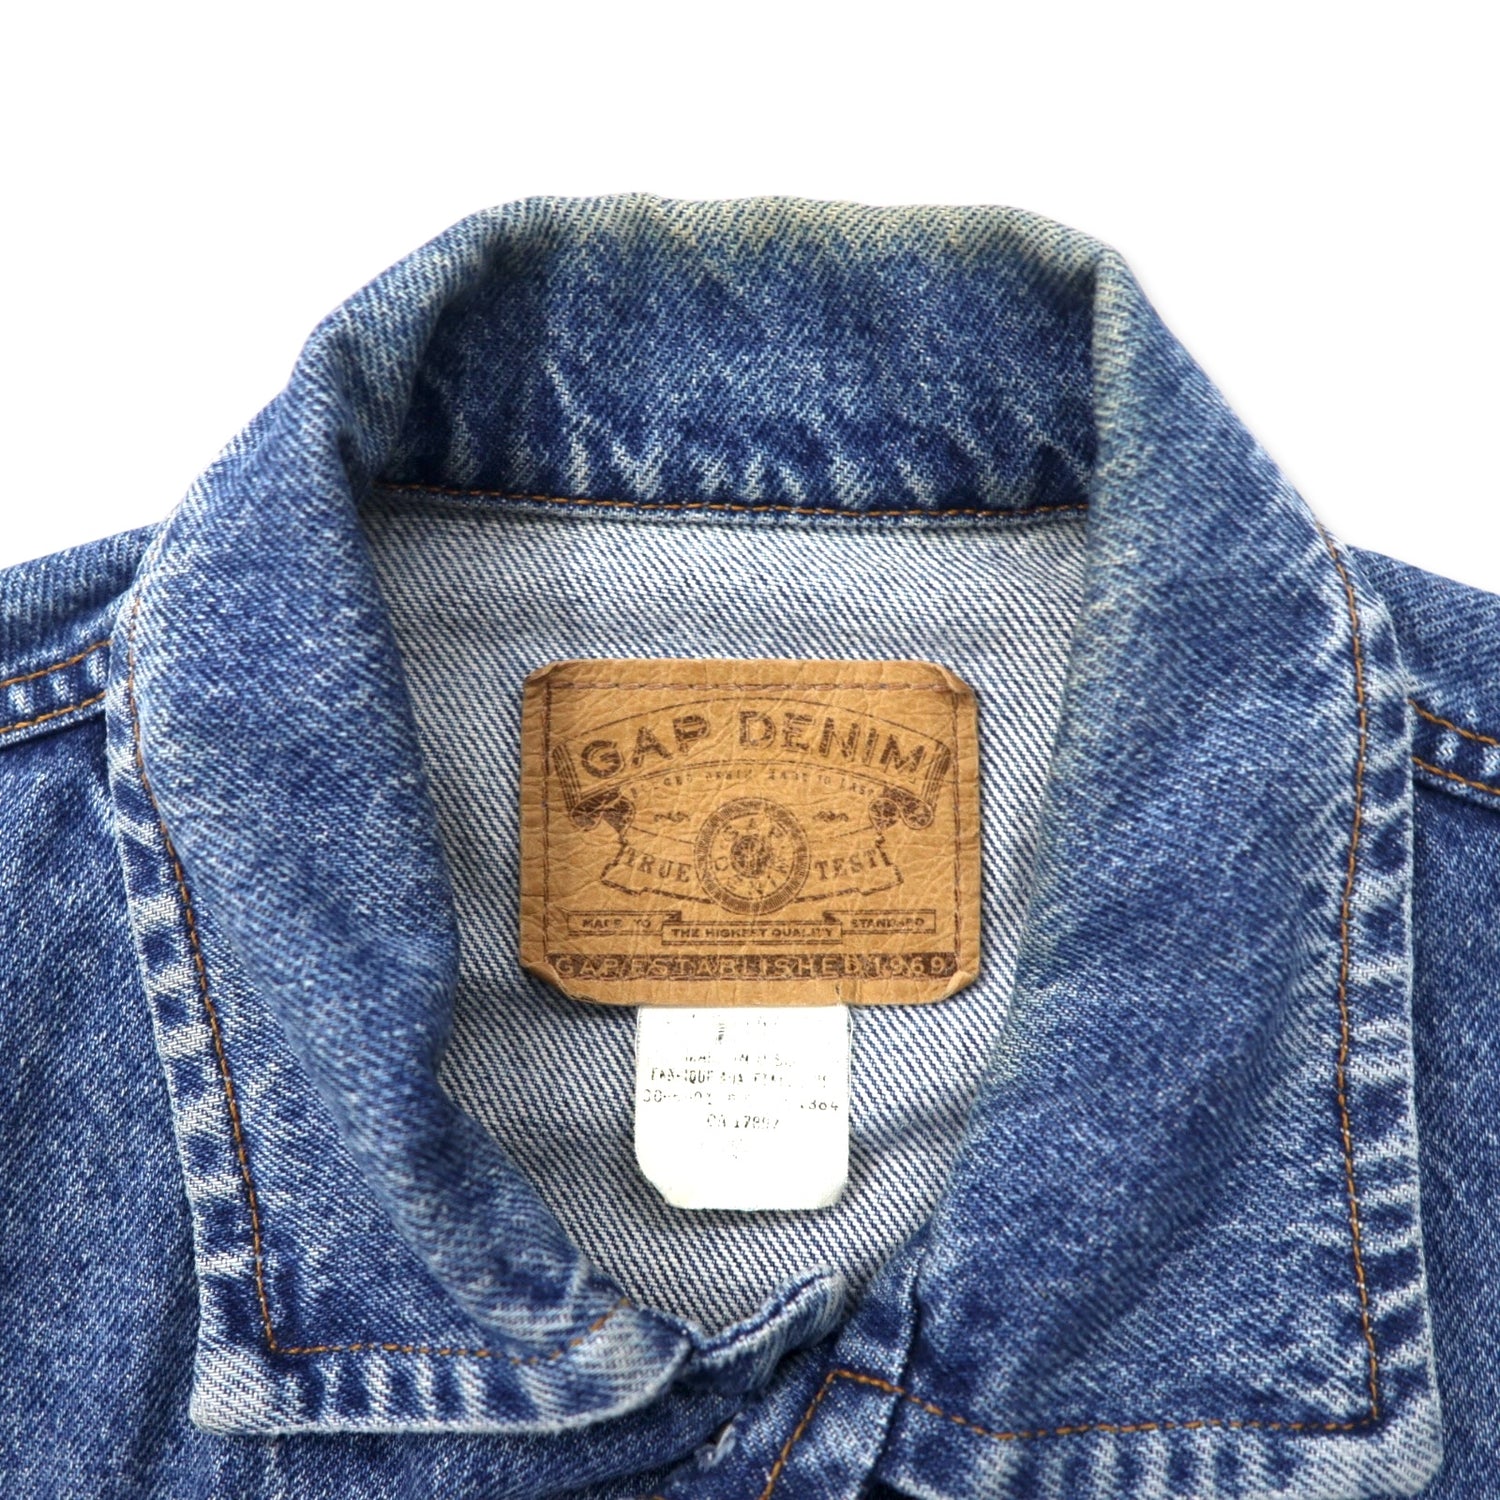 GAP DENIM USA MADE 90s Vintage Denim Jacket G Jean S Blue Cotton 